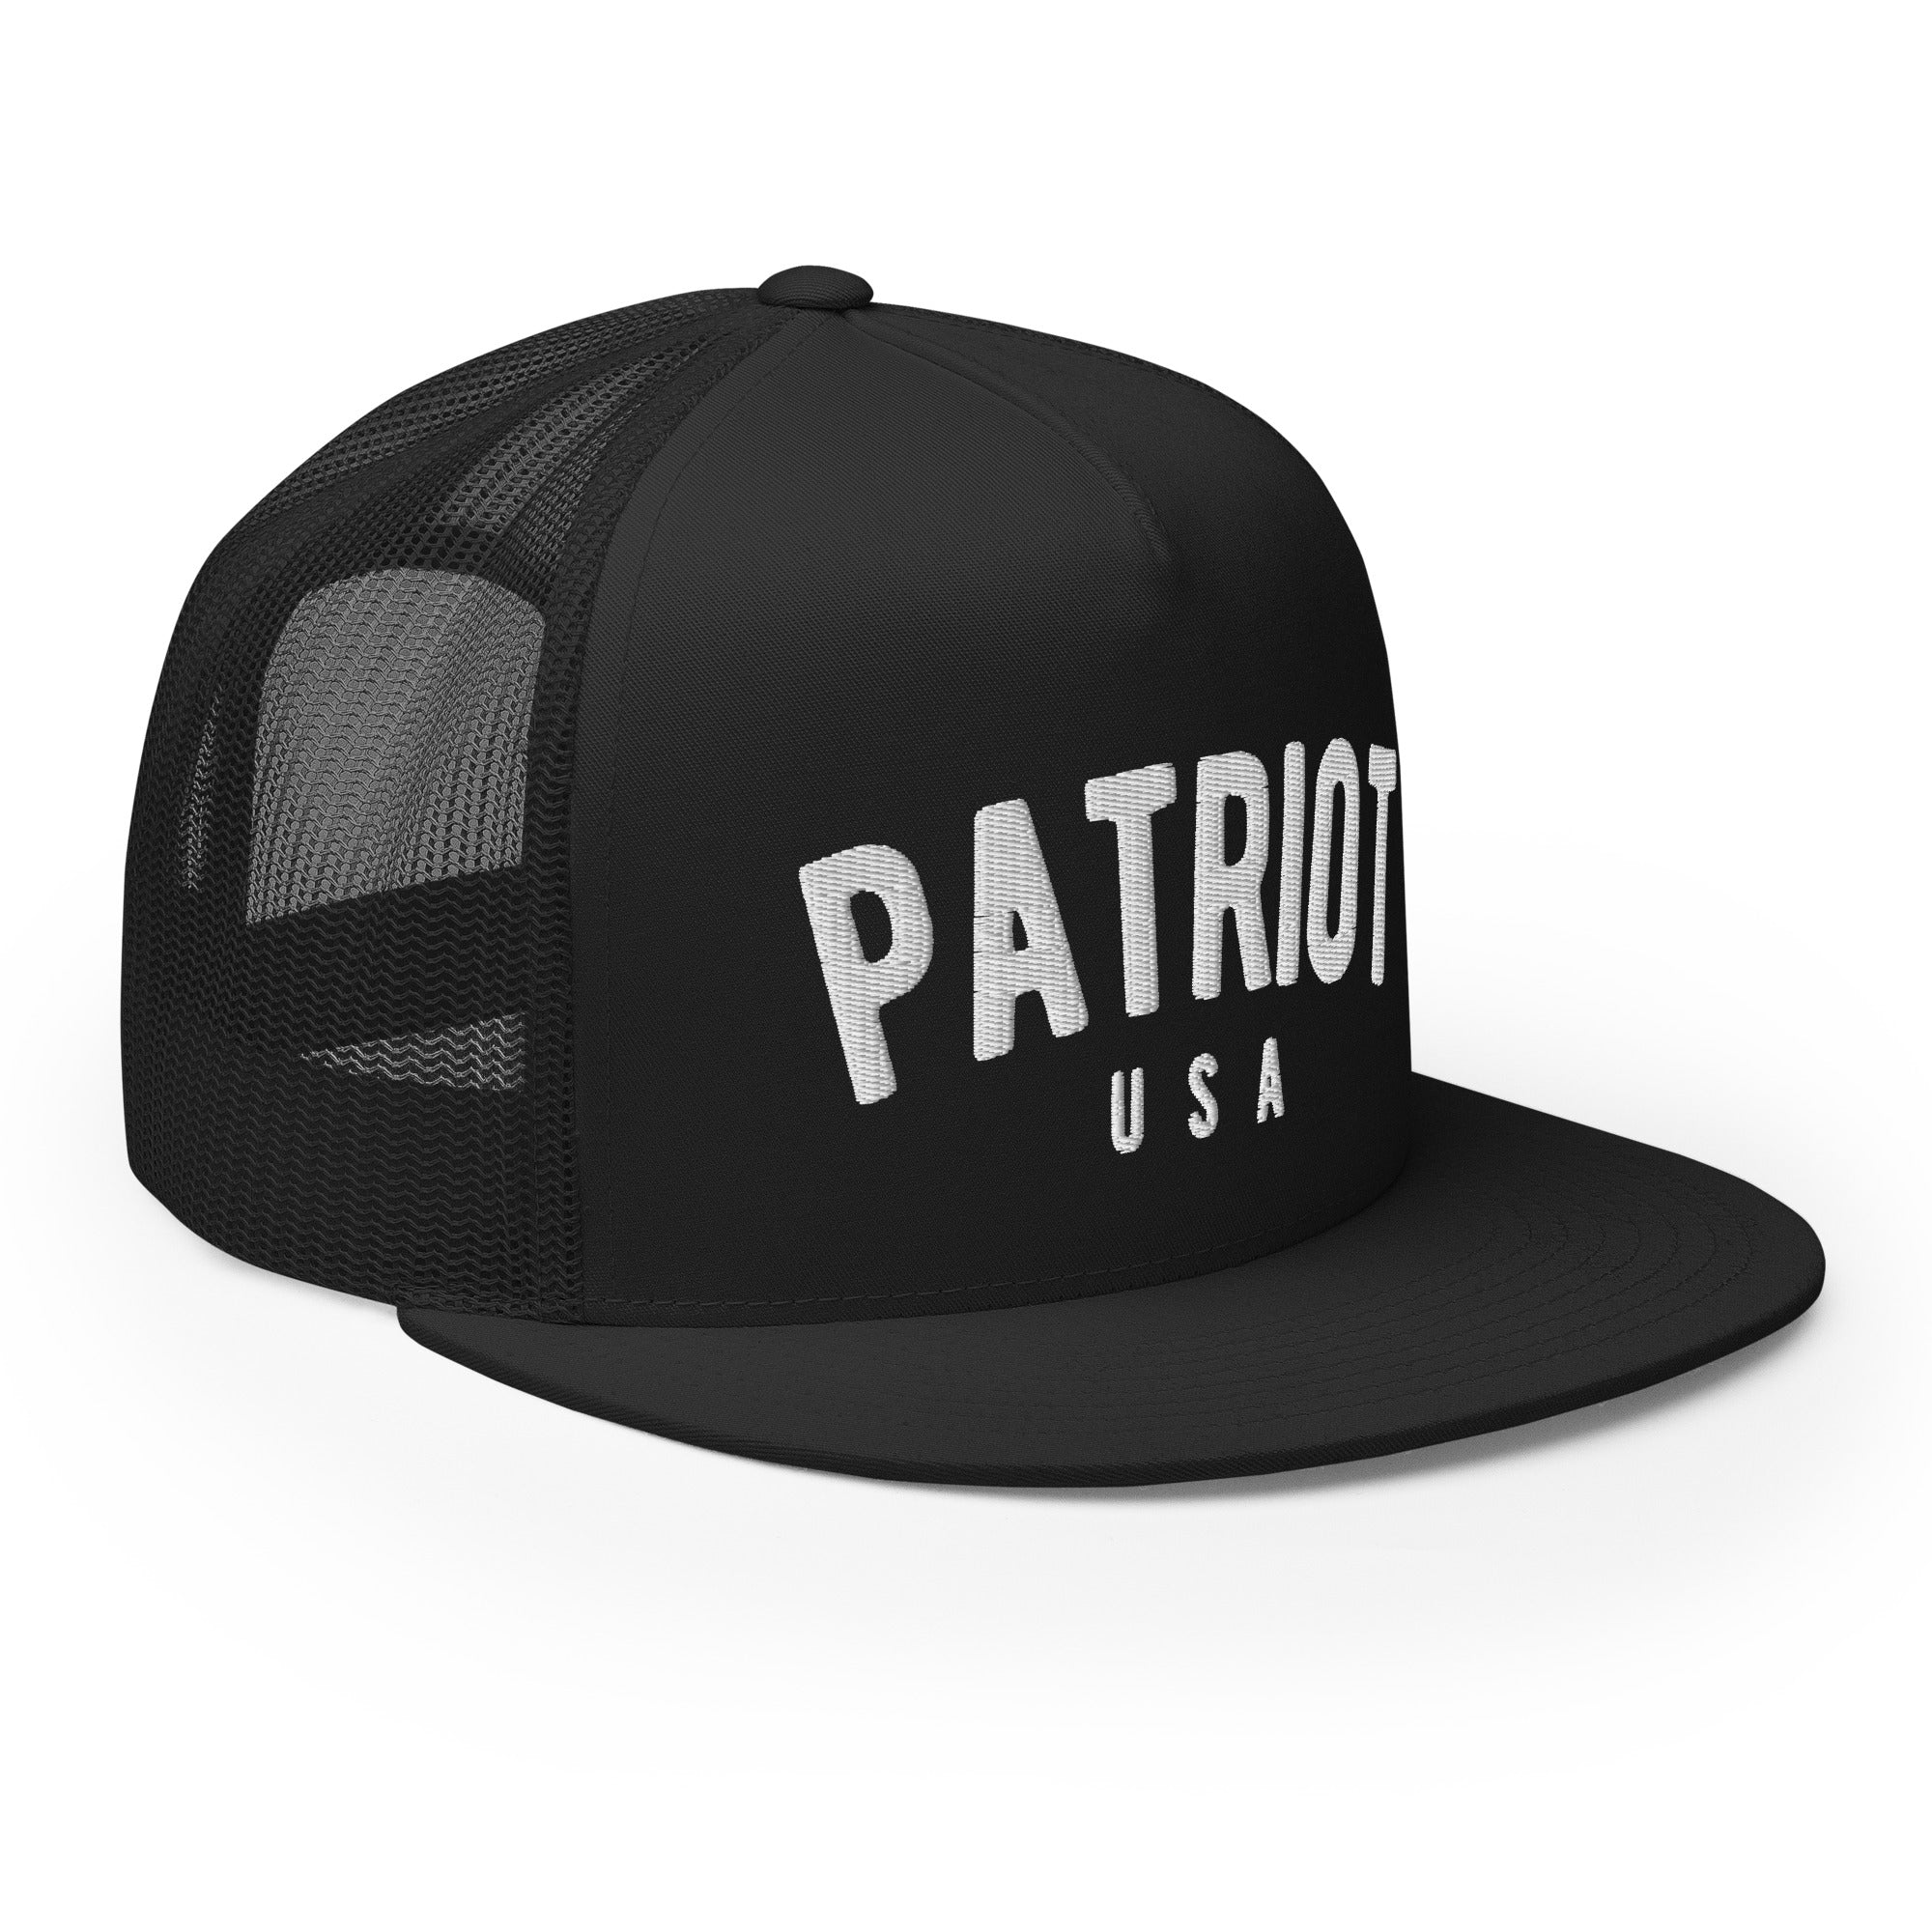 Patriot - Flat Bill Trucker Hat